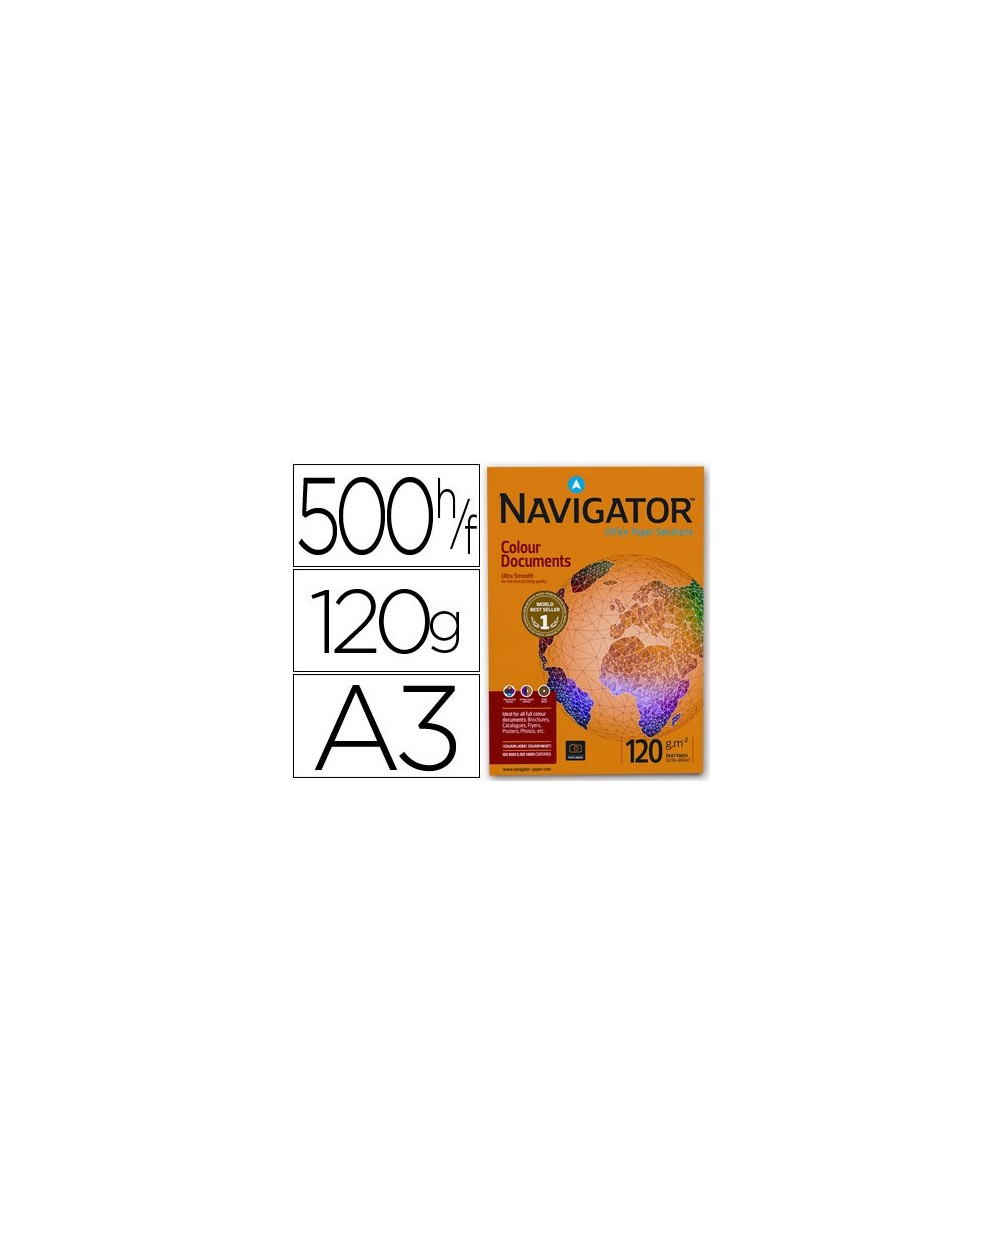 Papel fotocopiadora navigator din a3 120 gramos paquete de 500 hojas